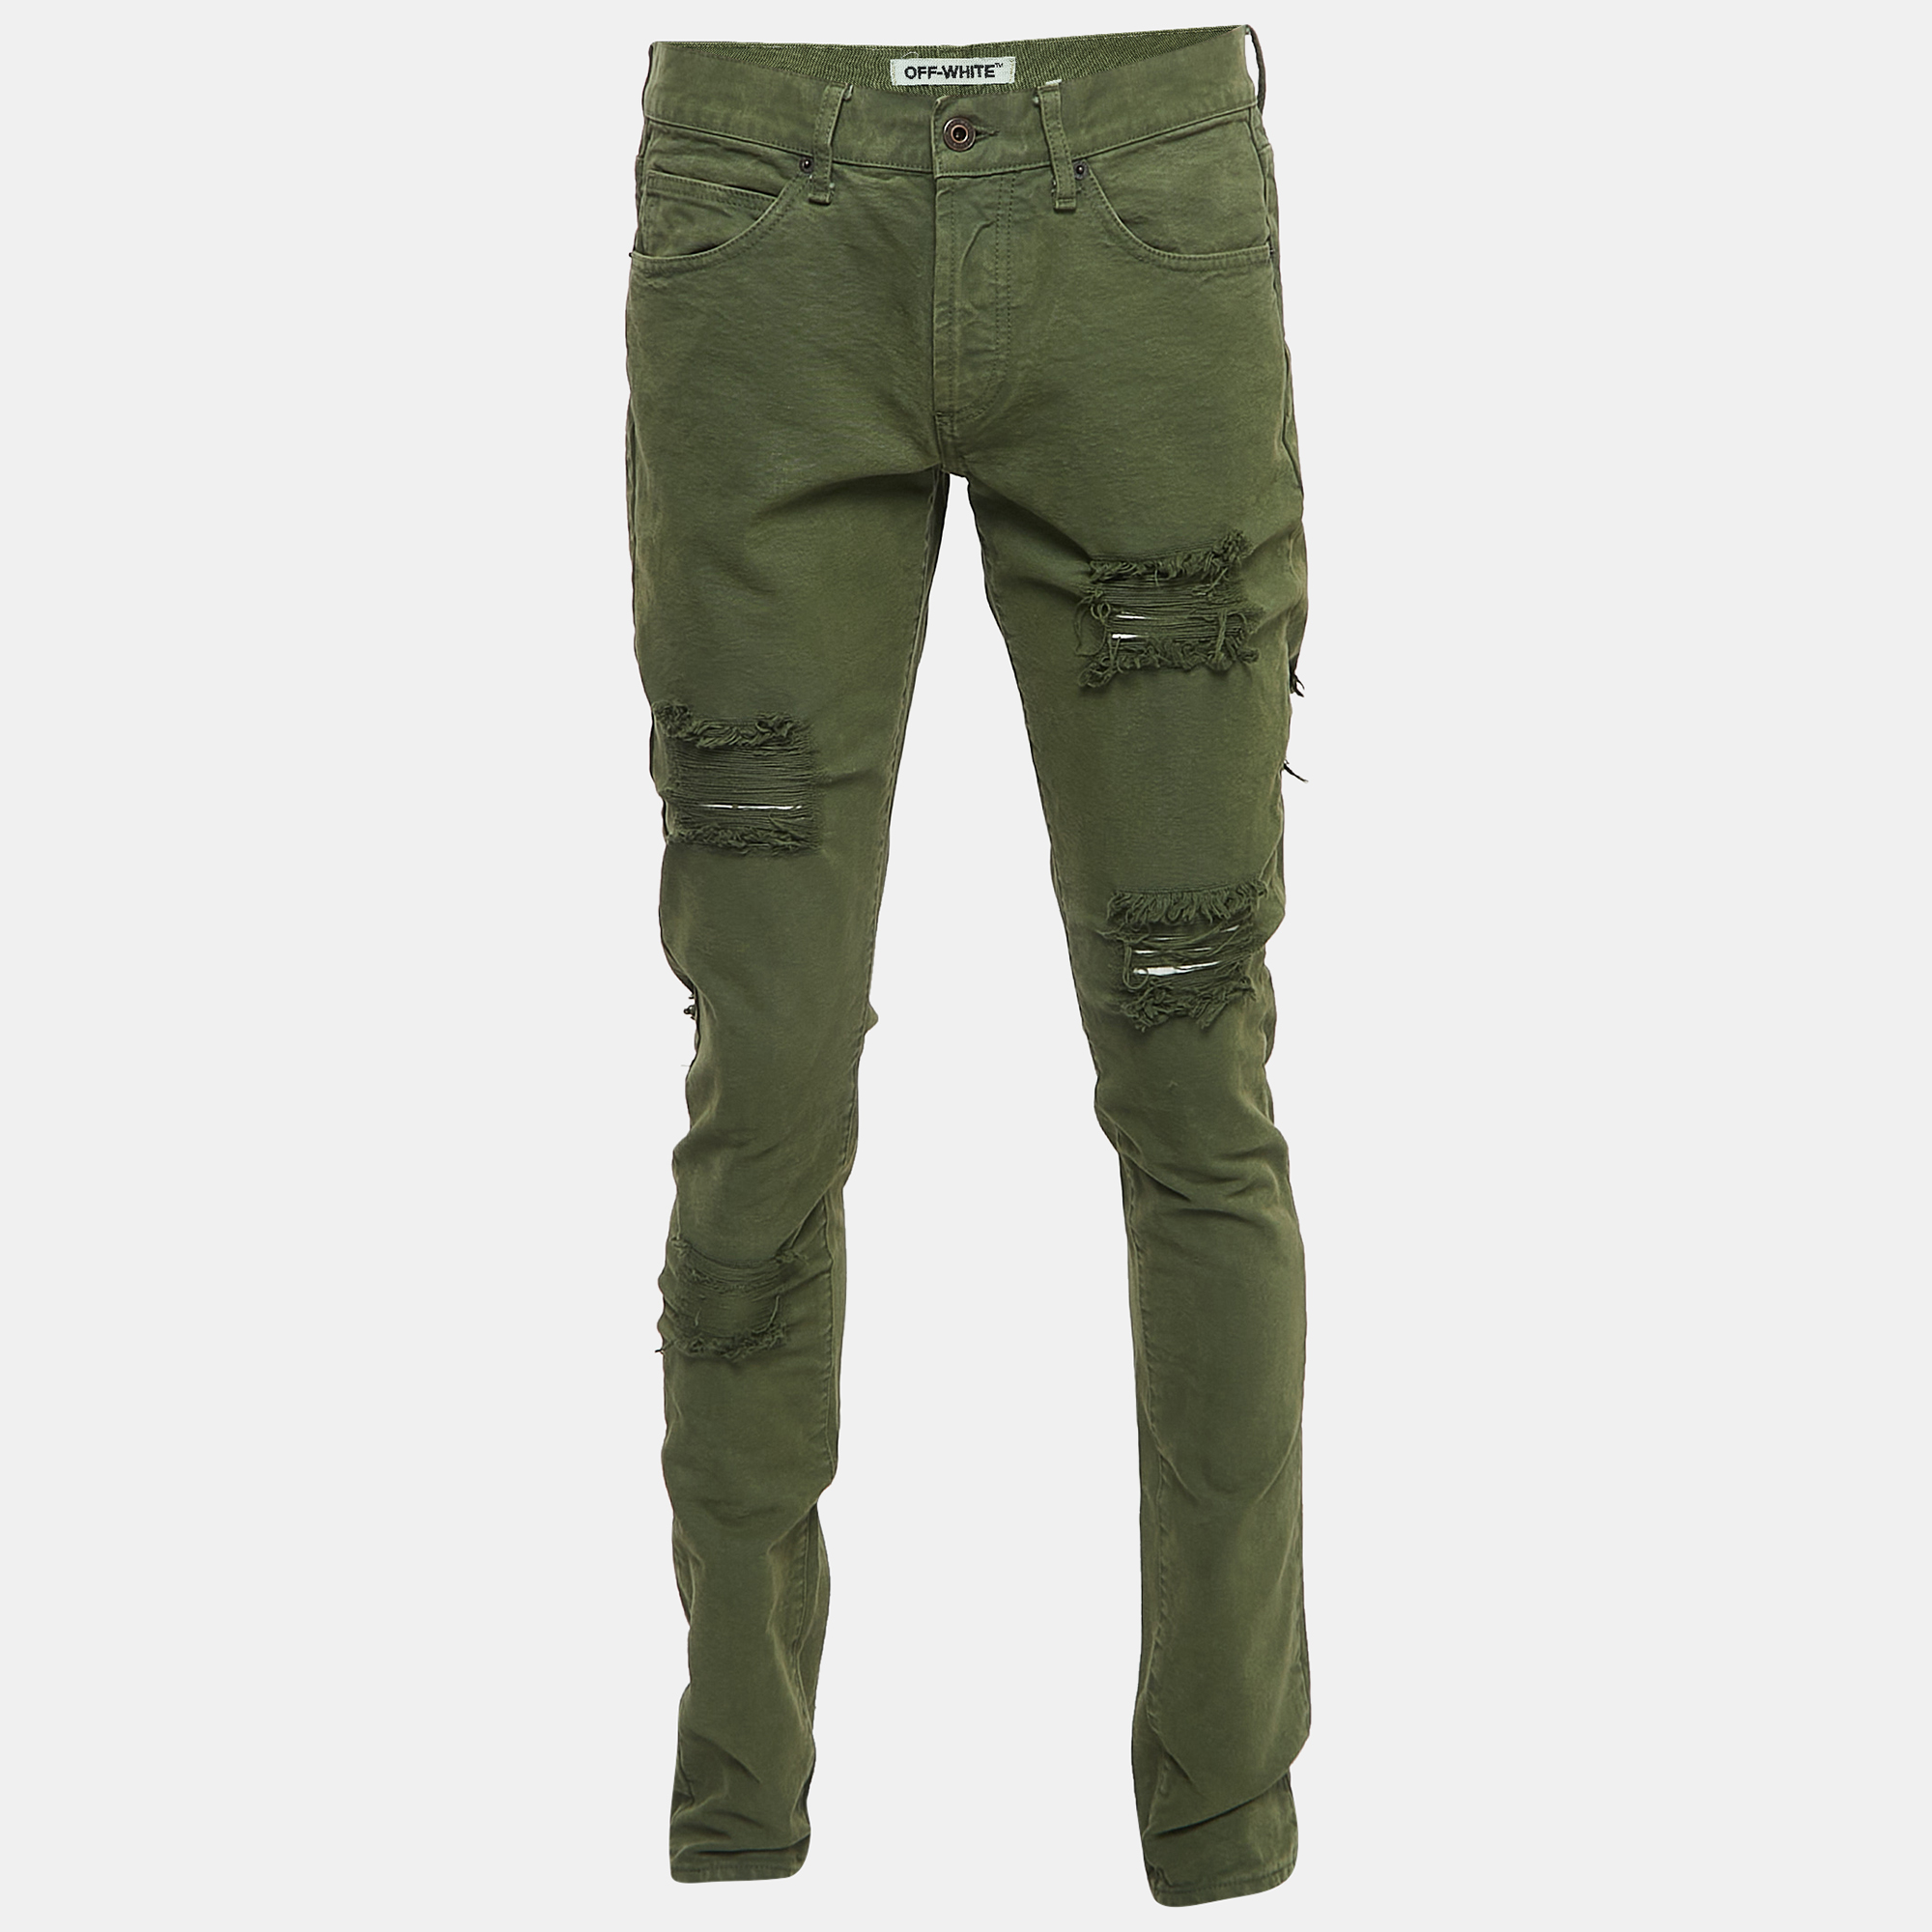 Off-white military green distressed denim jeans m waist 32"